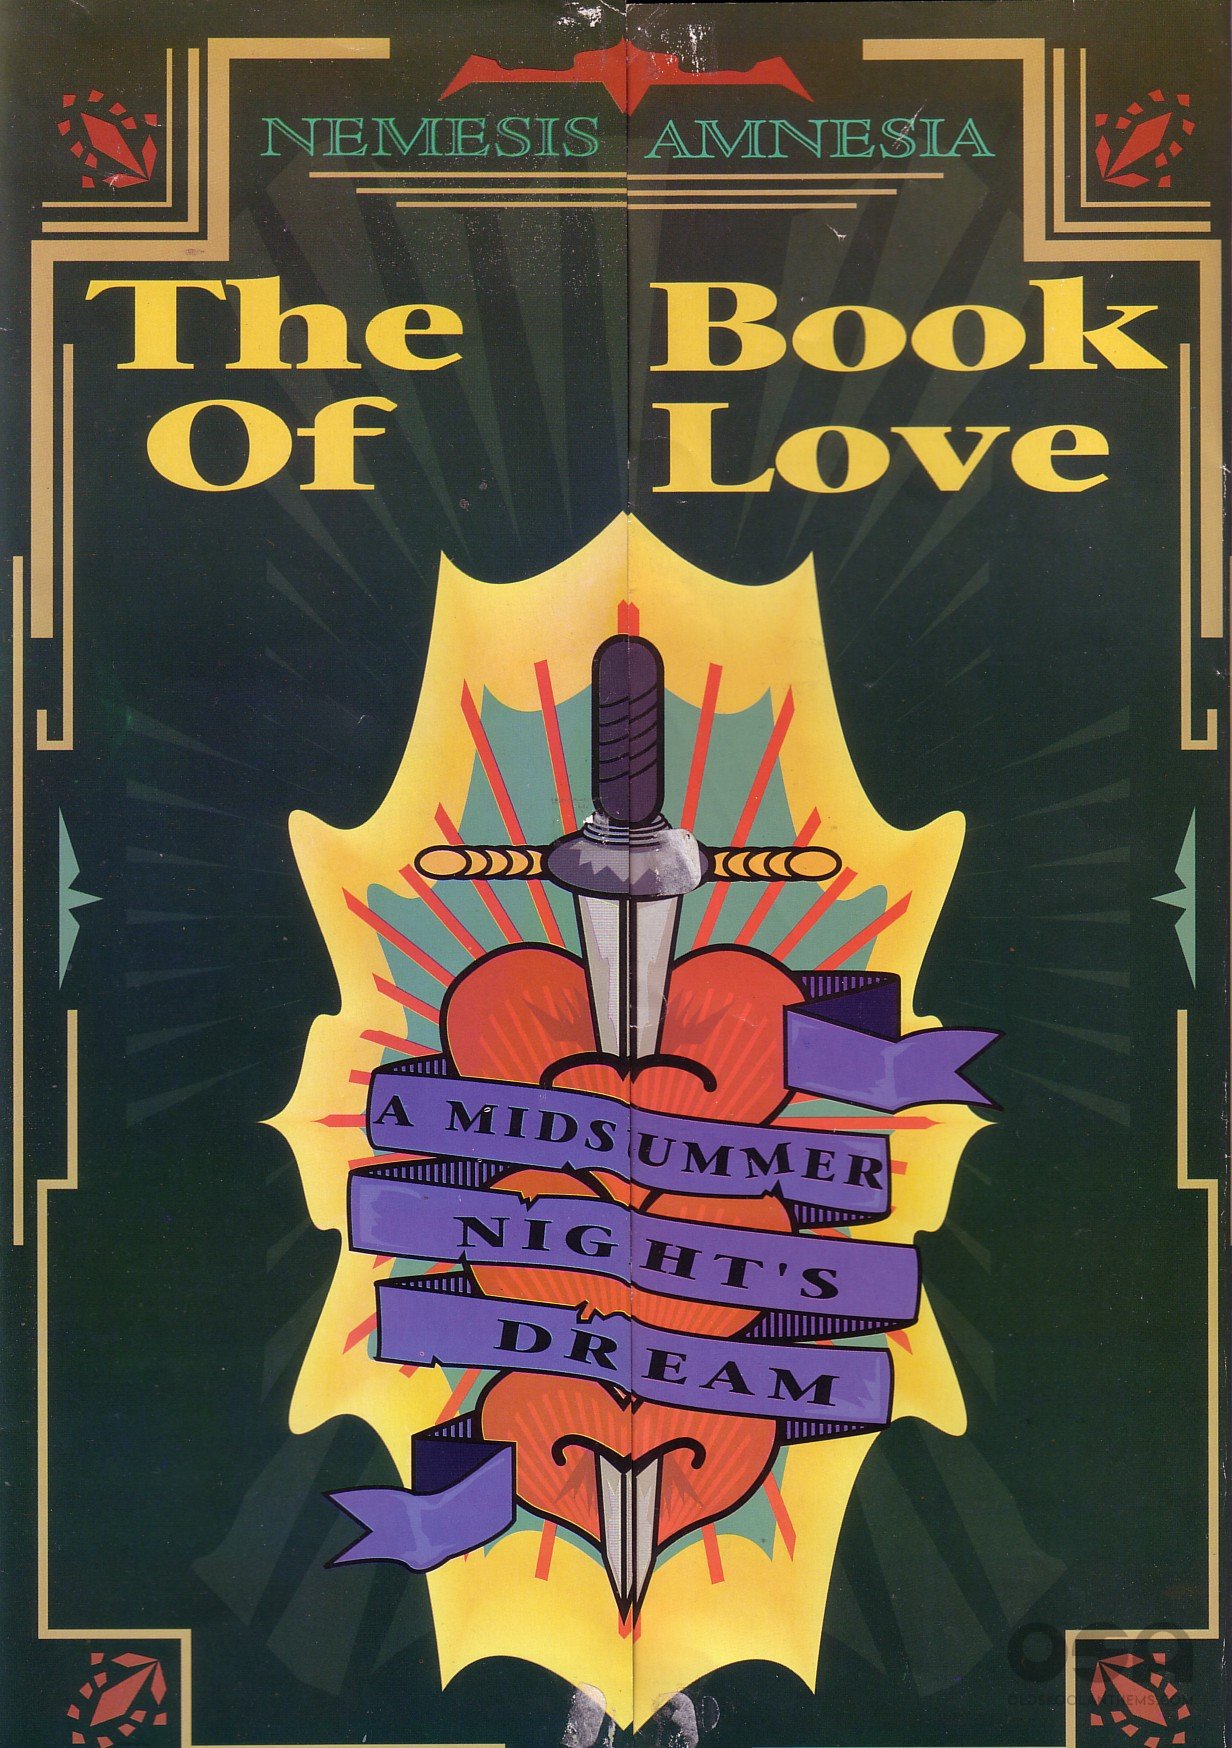 1_The_Book_of_Love_-_Sat_27th_June_1992_-_Brayfield_Stadium_-_Northamptonshire.jpg